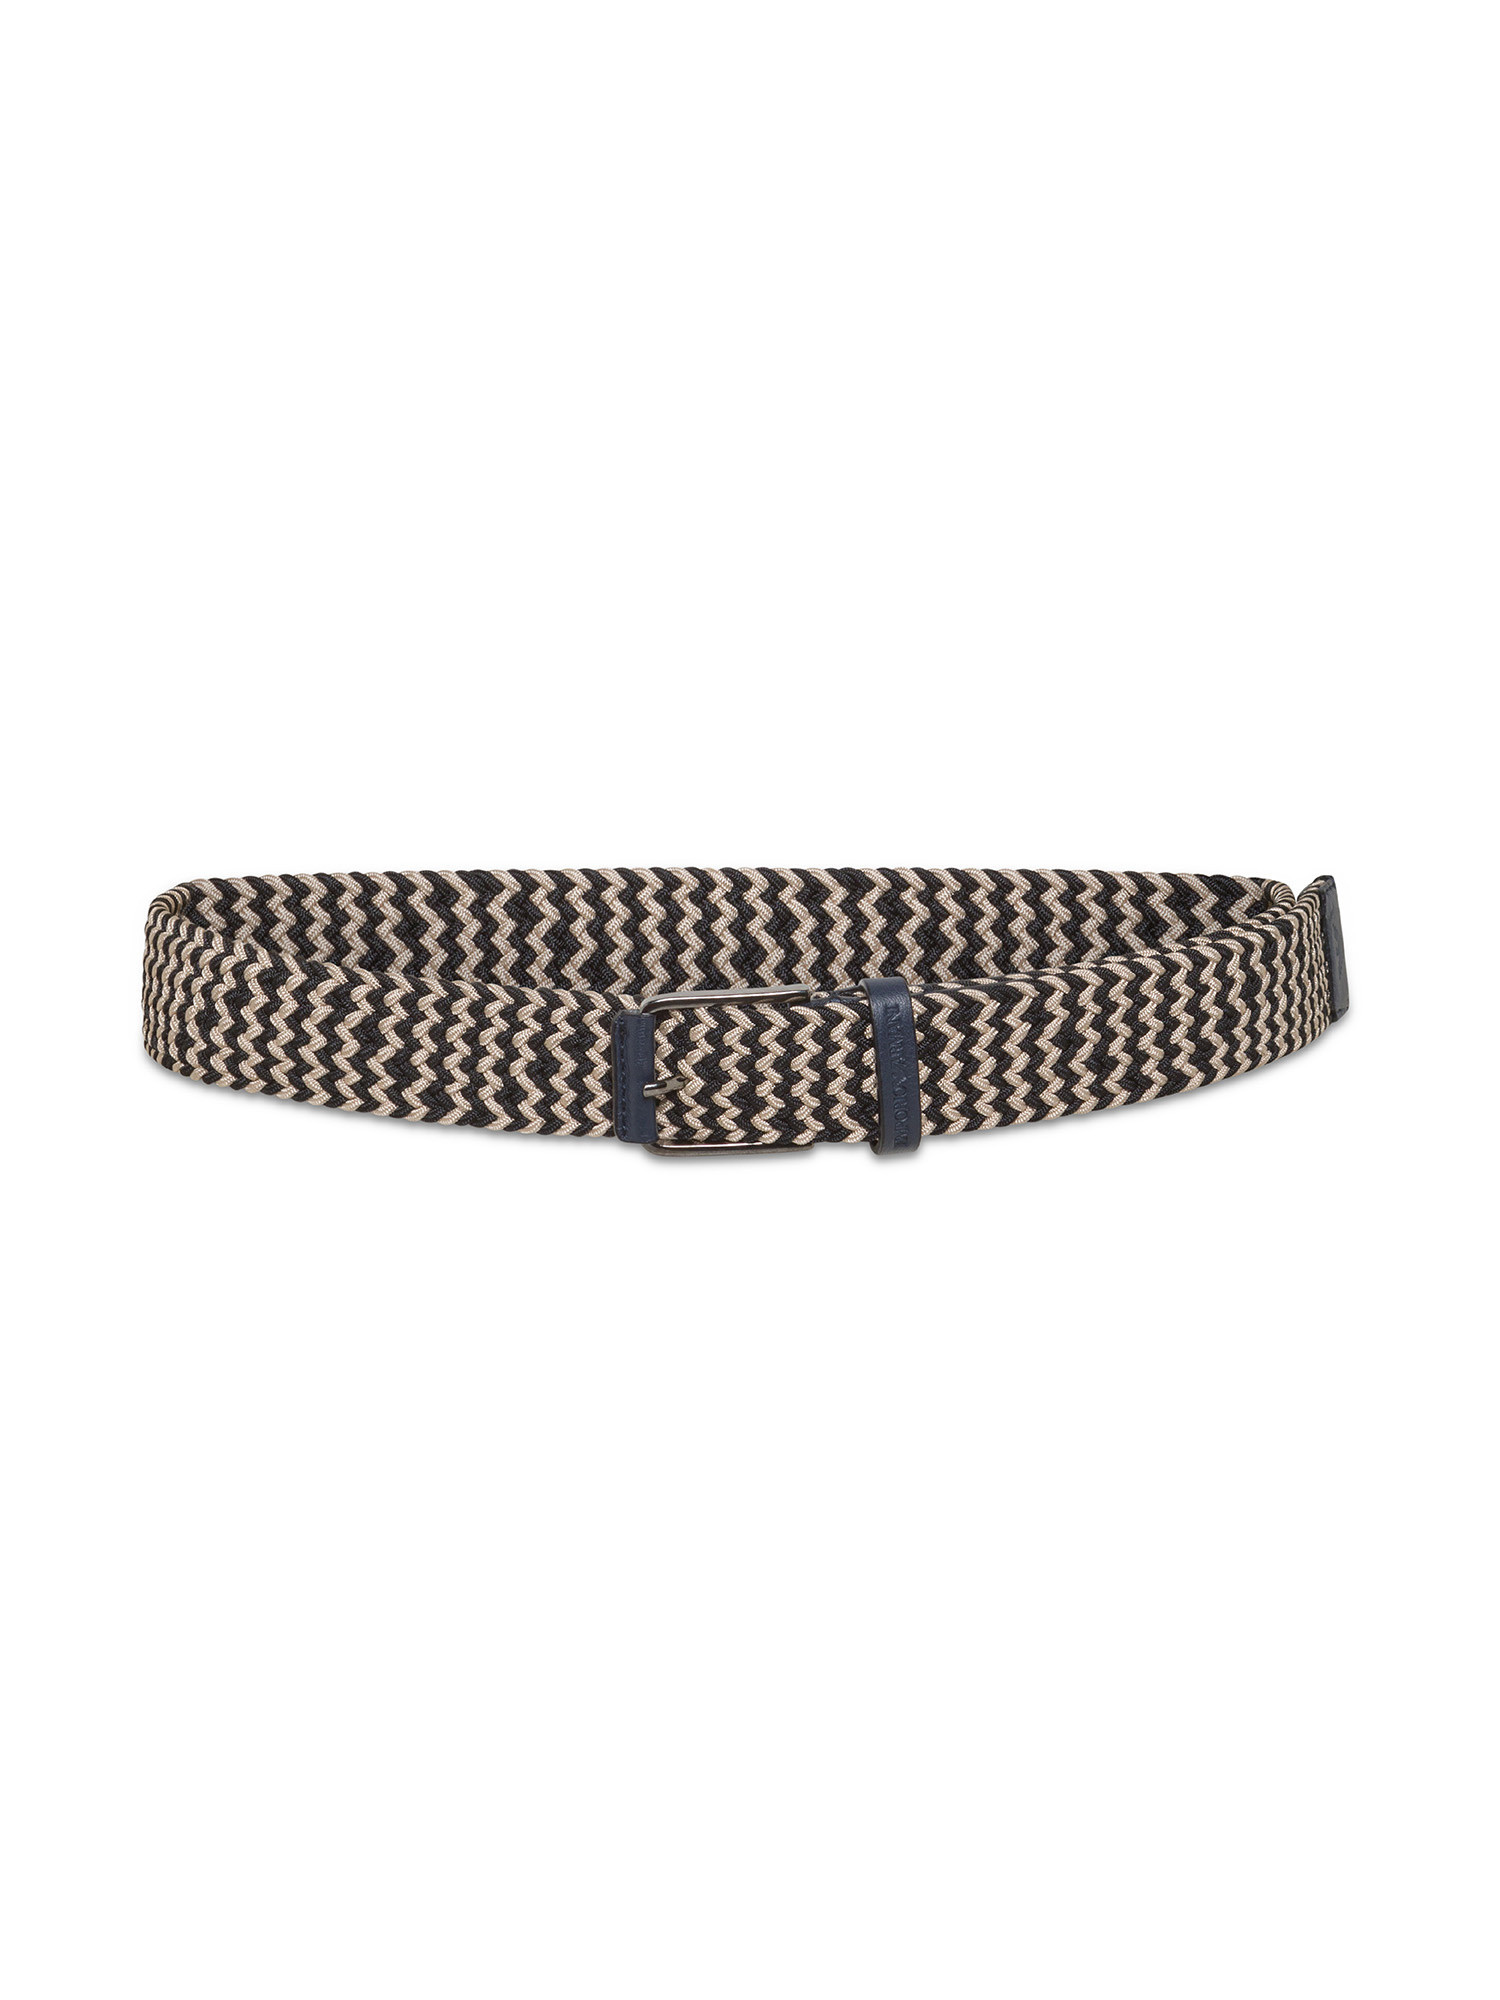 Emporio Armani - Braided belt, Dark Blue, large image number 1